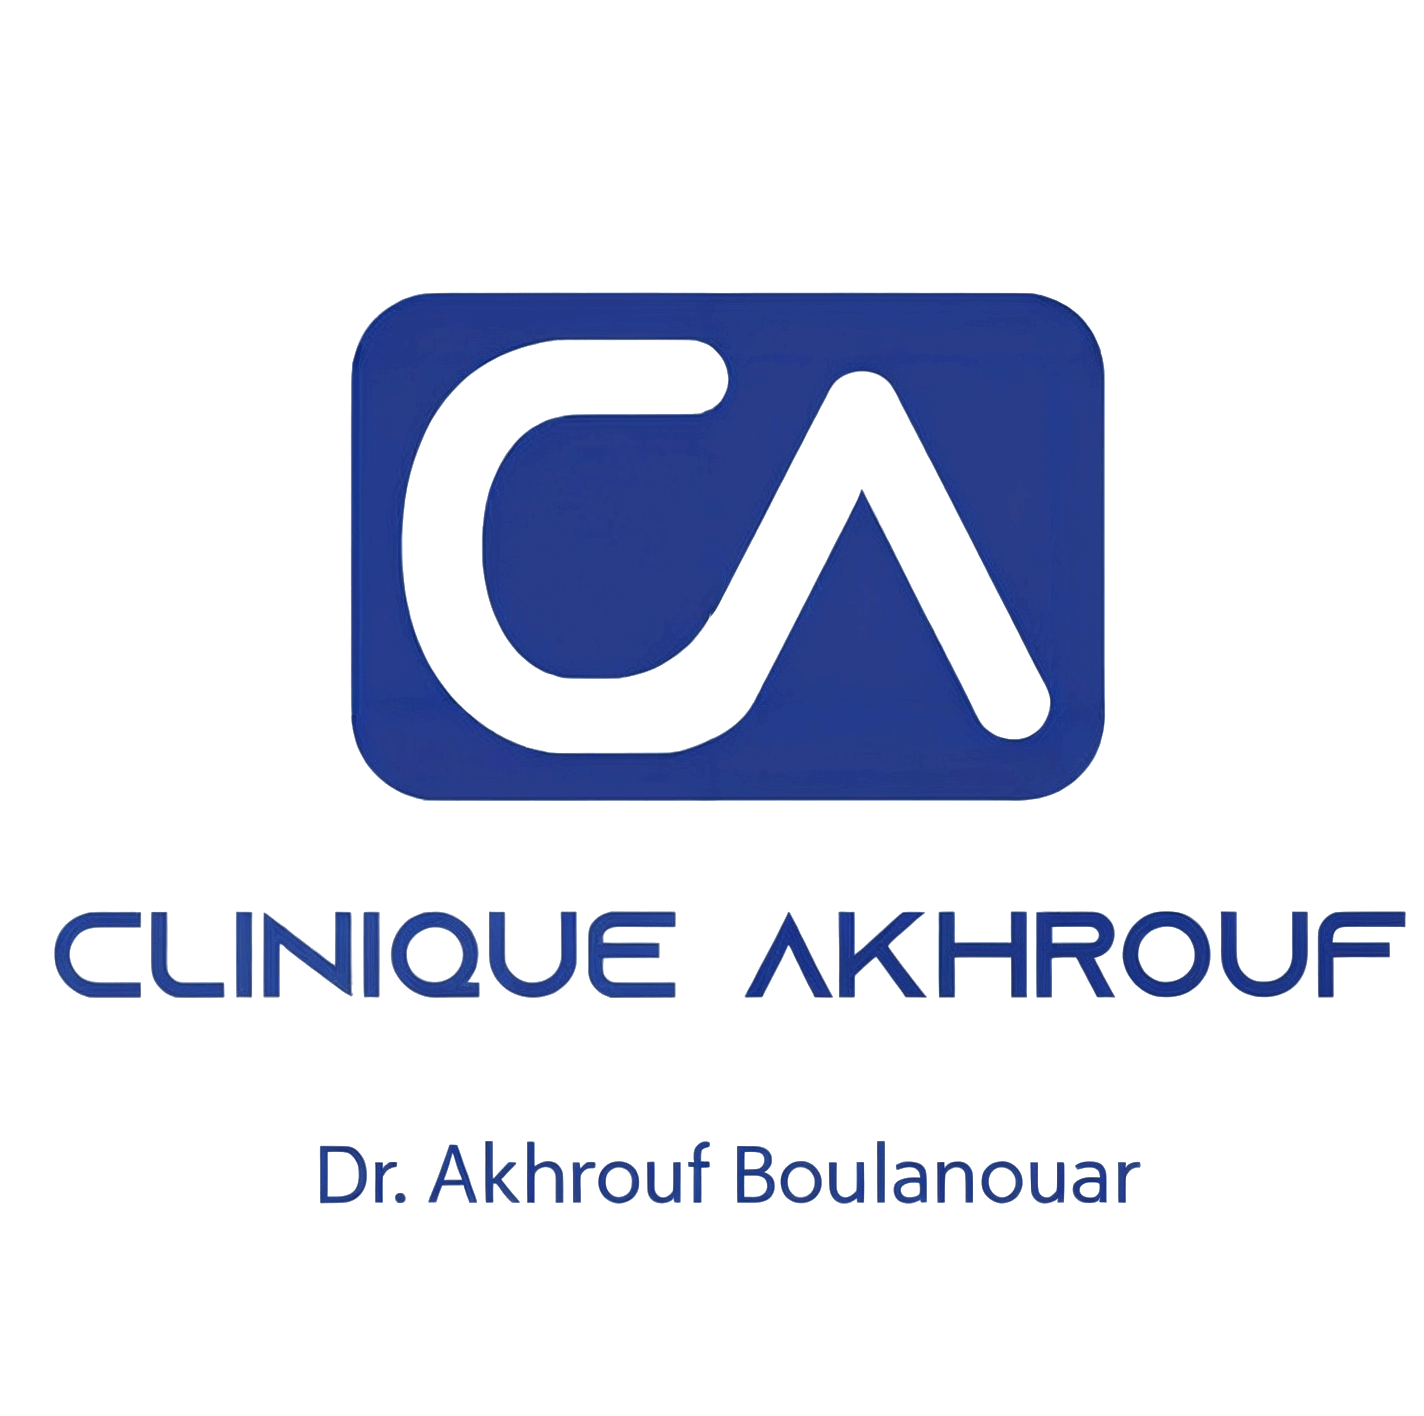 Clinique Akhrouf